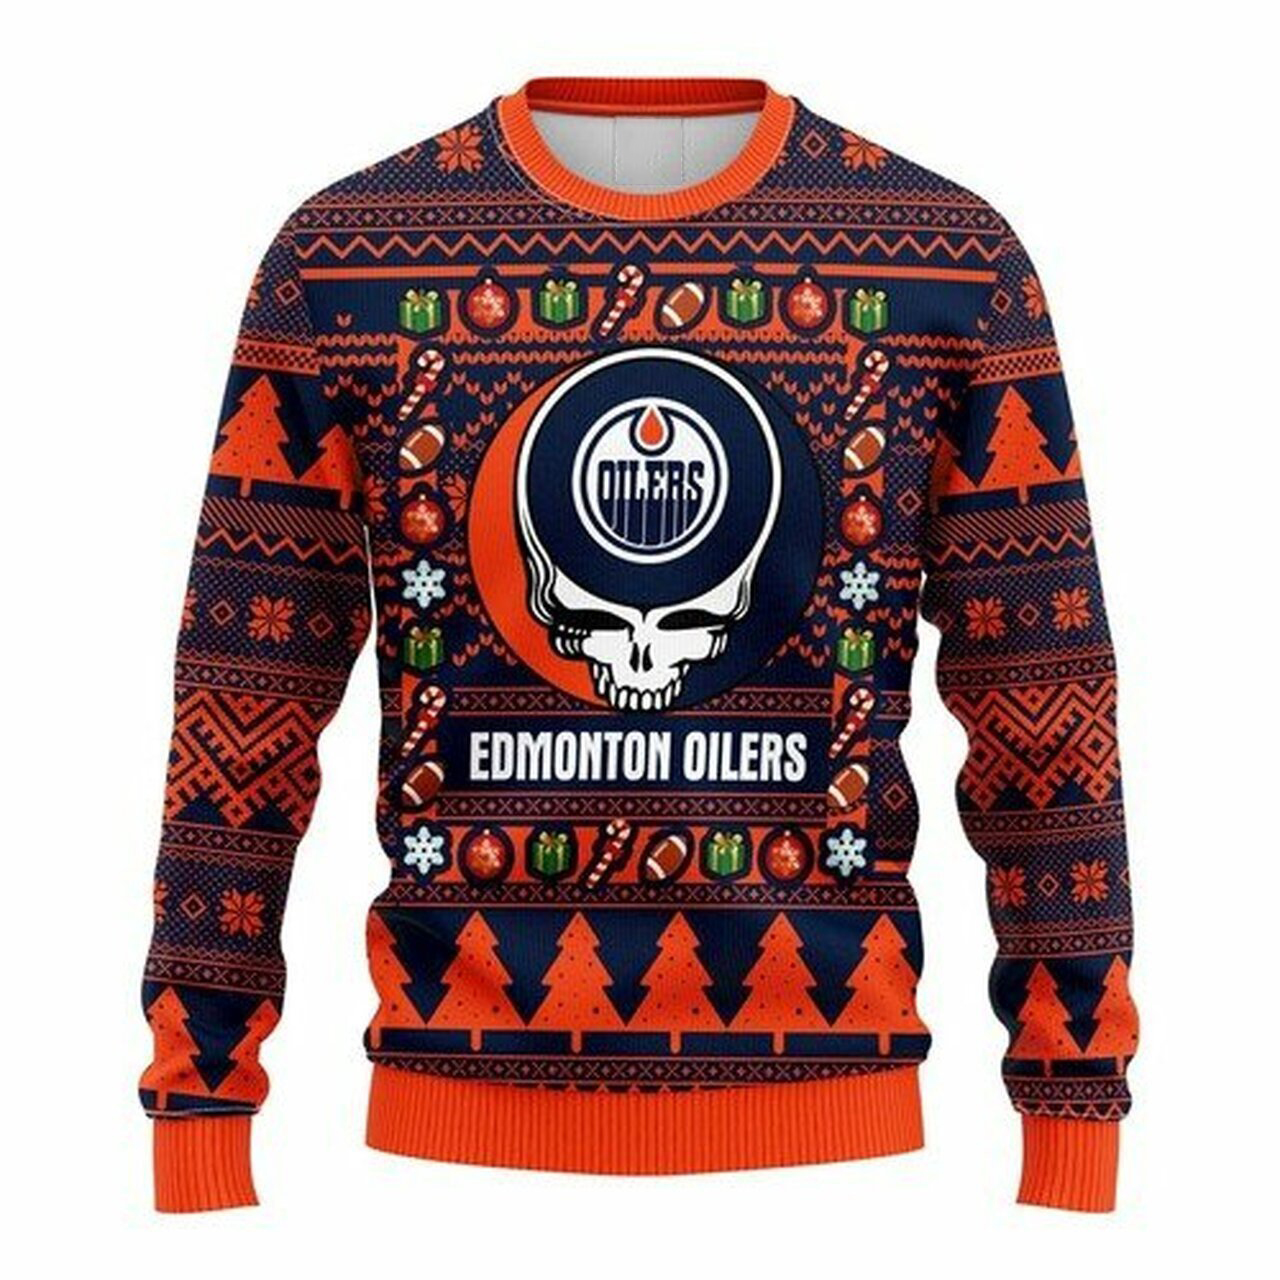 NHL Edmonton Oilers Grateful Dead ugly christmas sweater